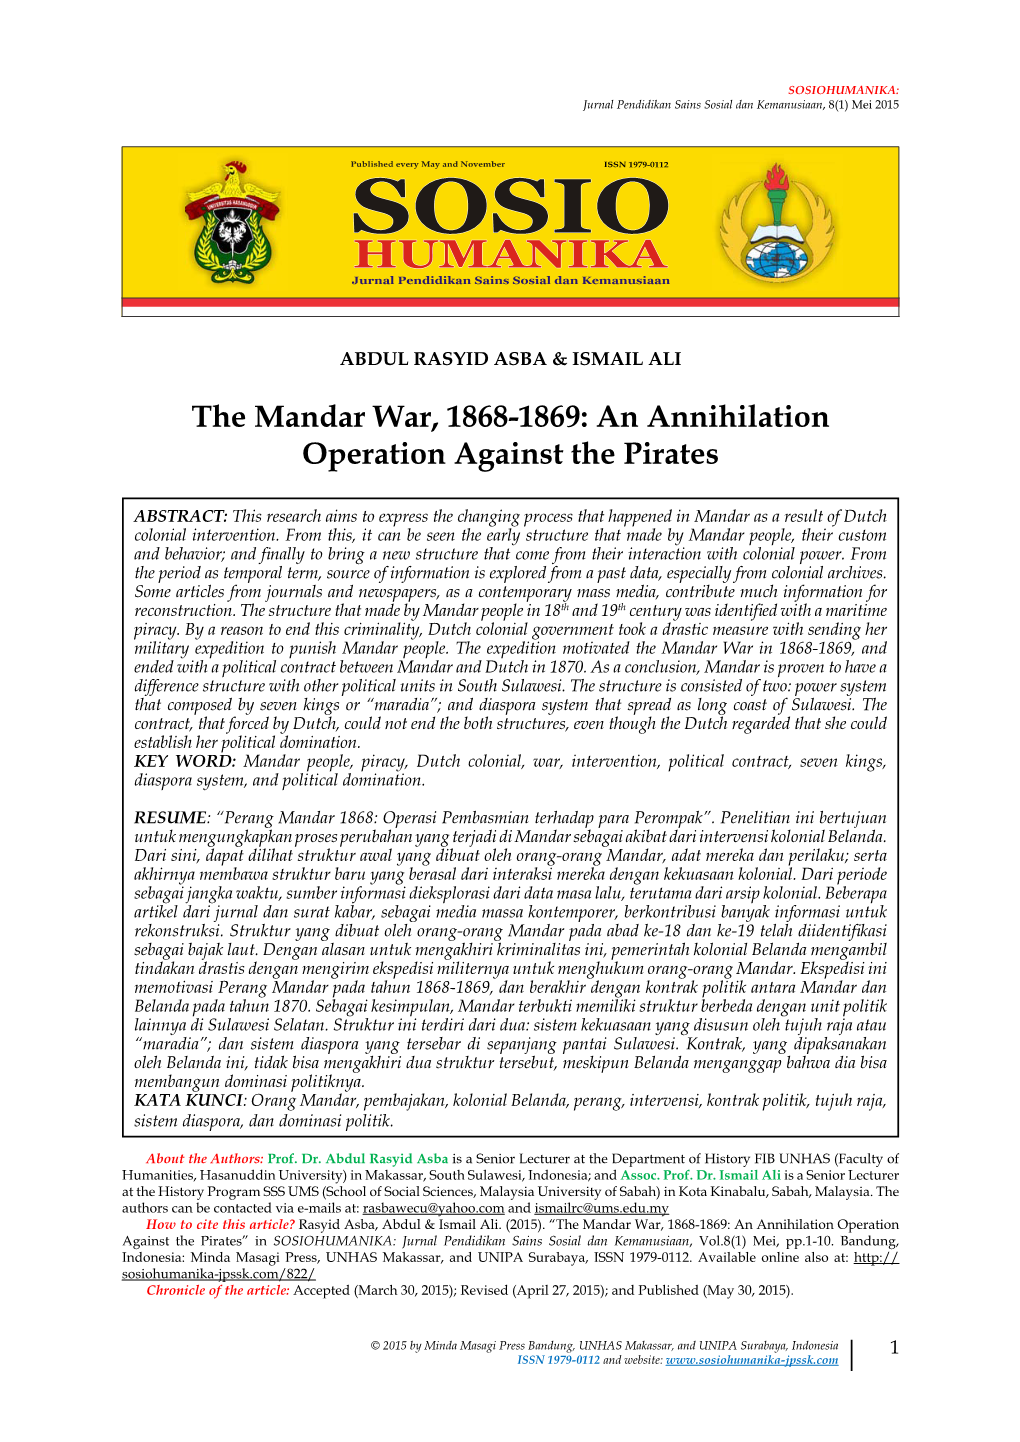 The Mandar War, 1868-1869: an Annihilation Operation Against the Pirates